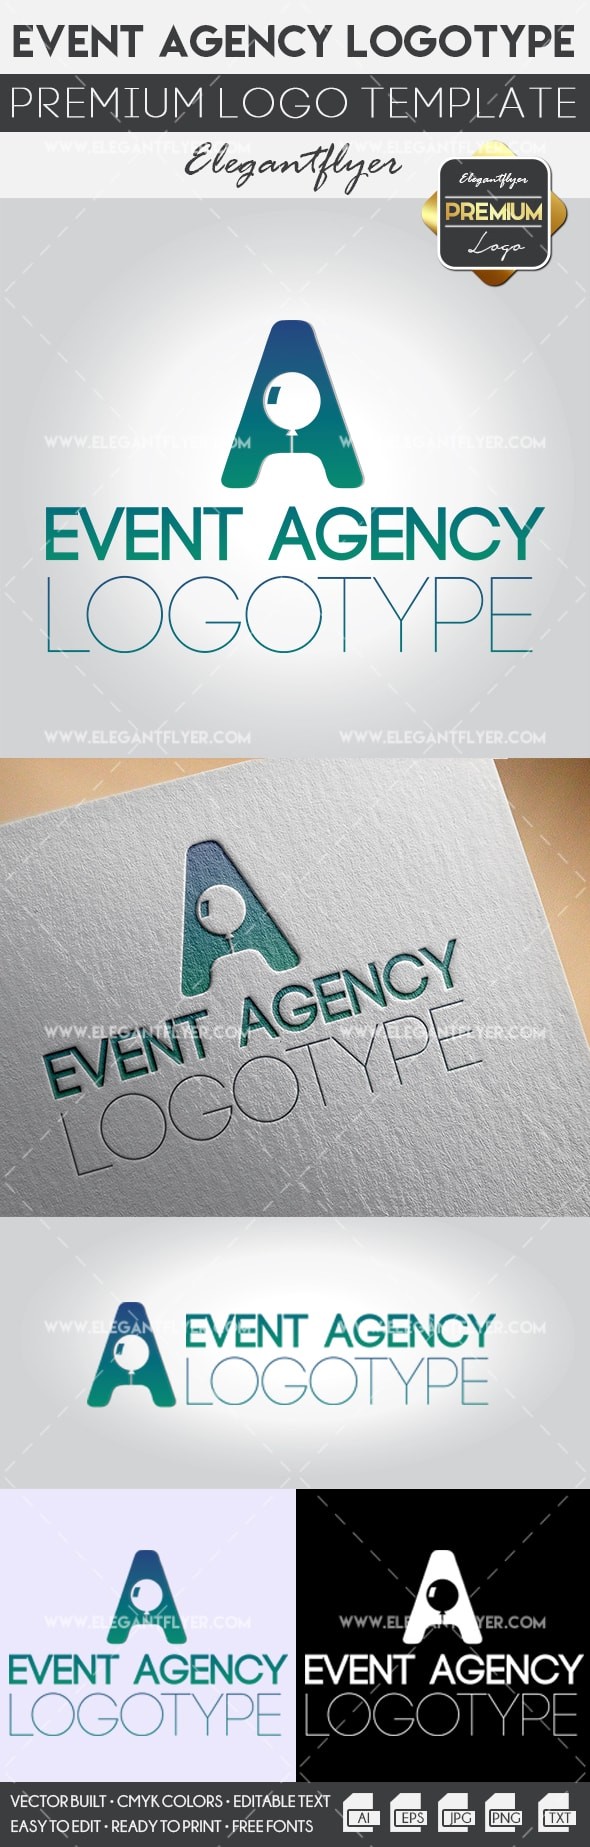 Event Agency by ElegantFlyer